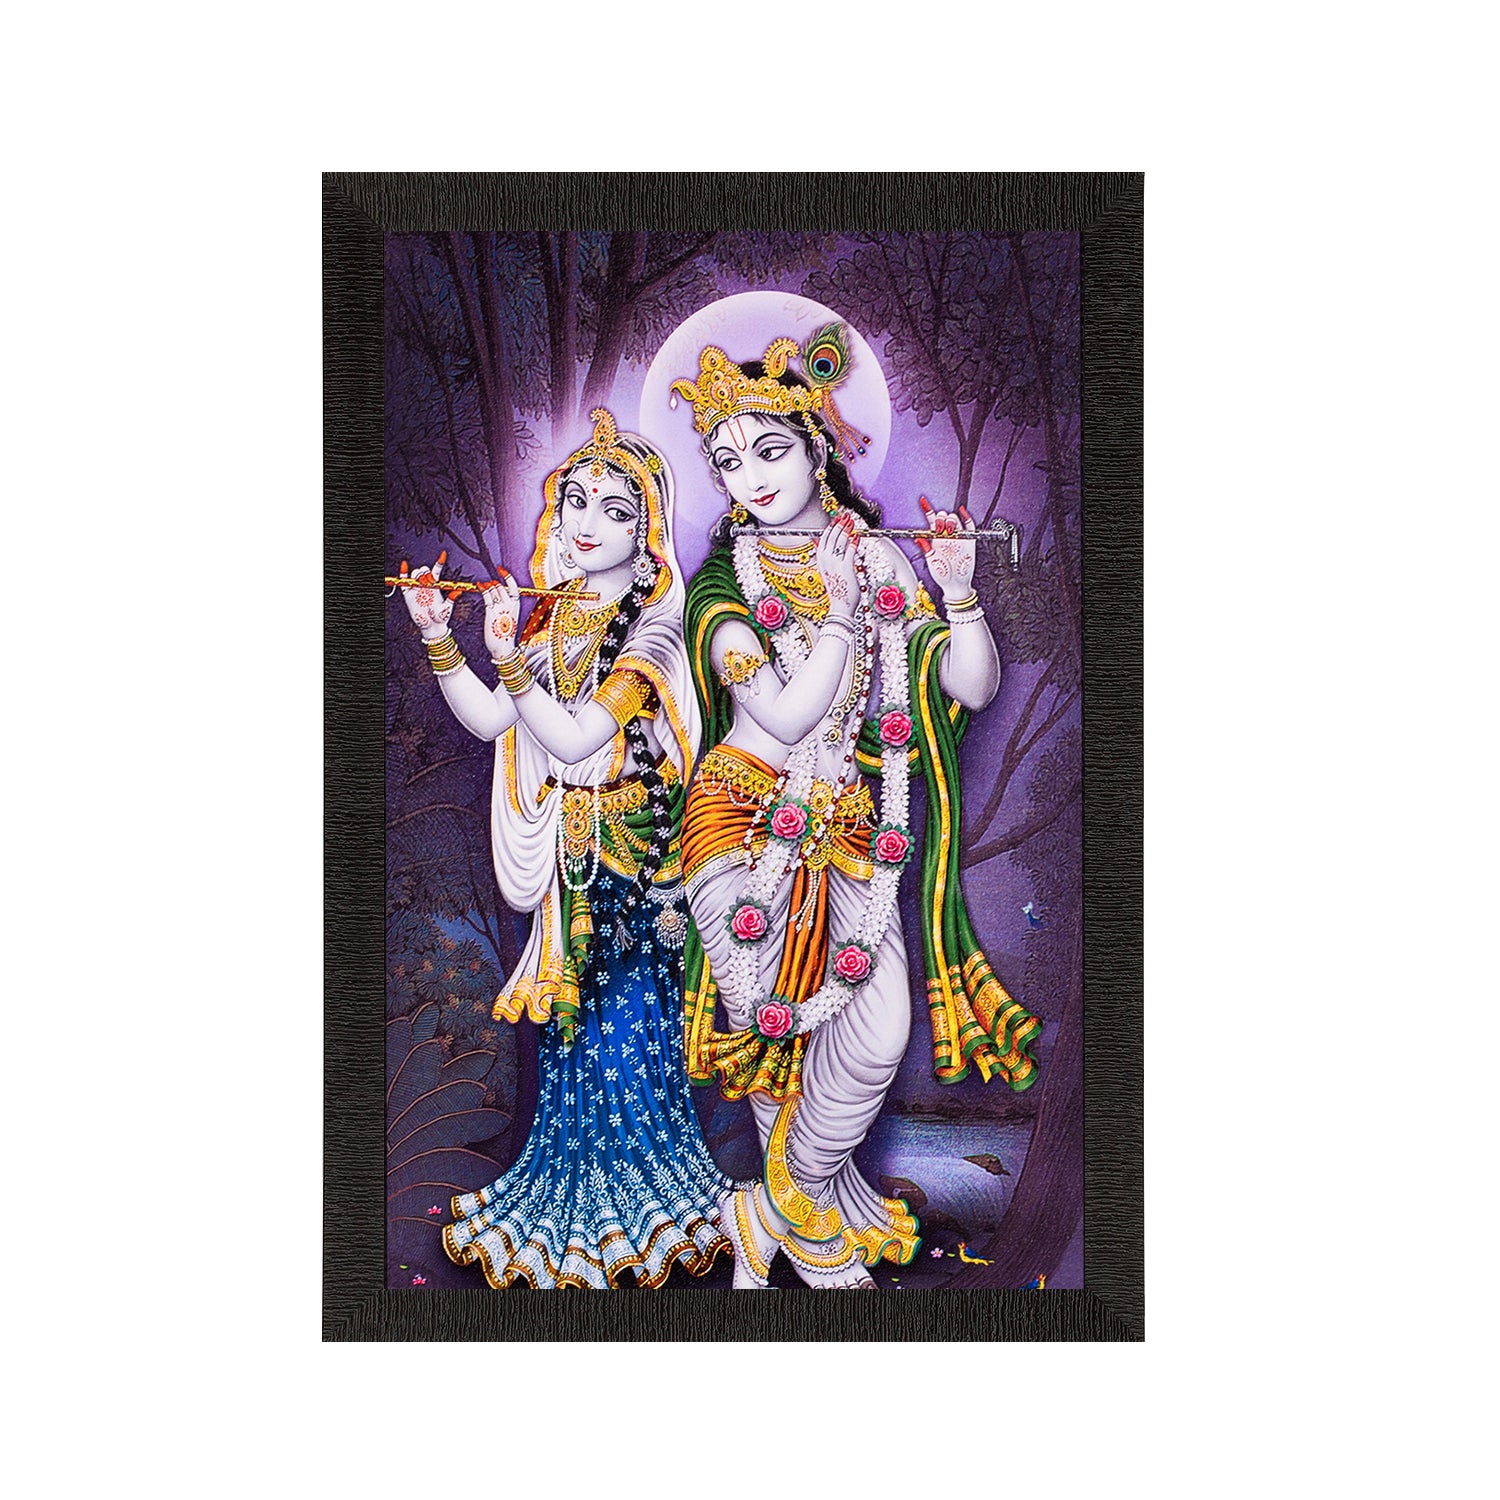 Radha Krishna Both Playing Flute Wall Painting Digital Printed Religious Art